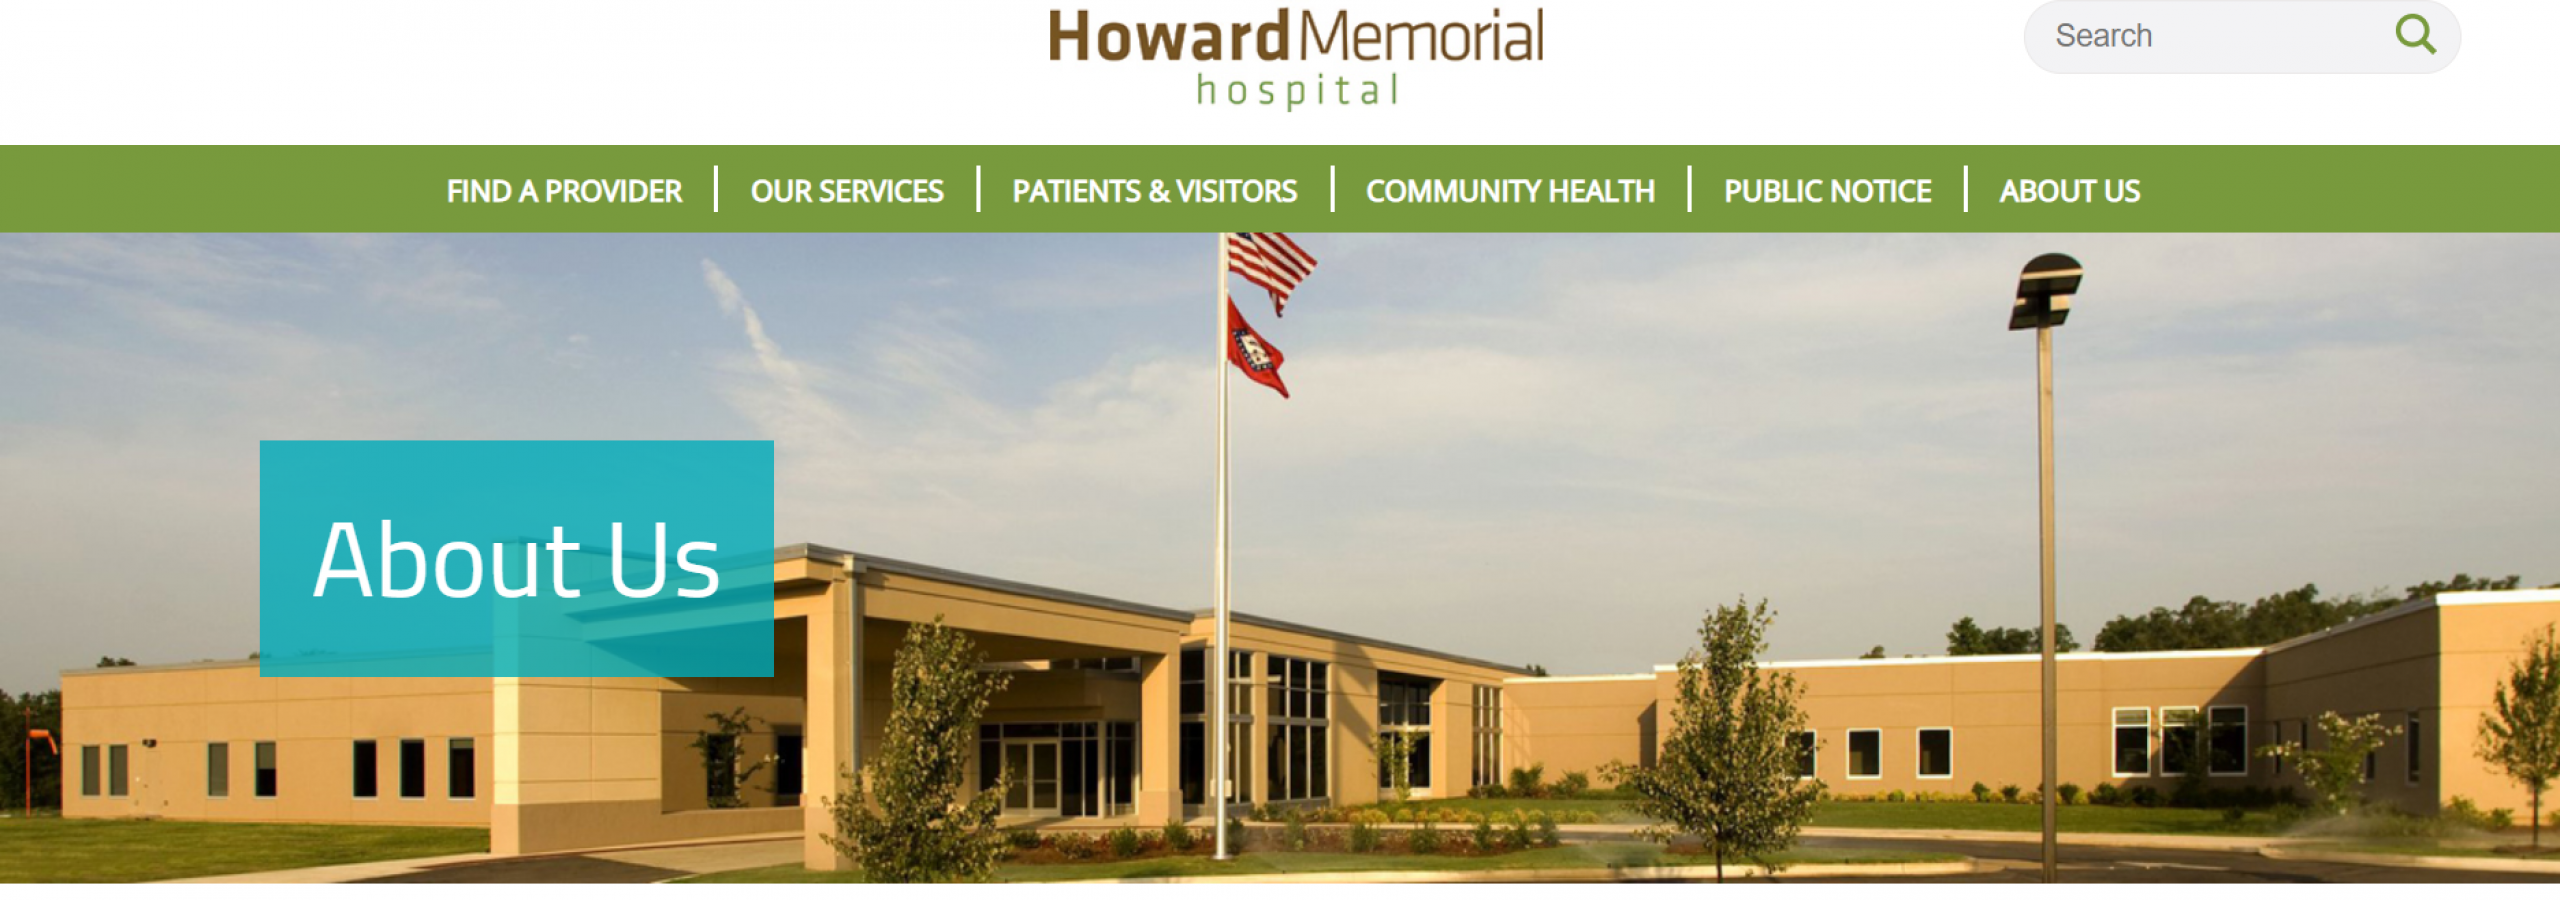 photo of howard memorial data breach notice